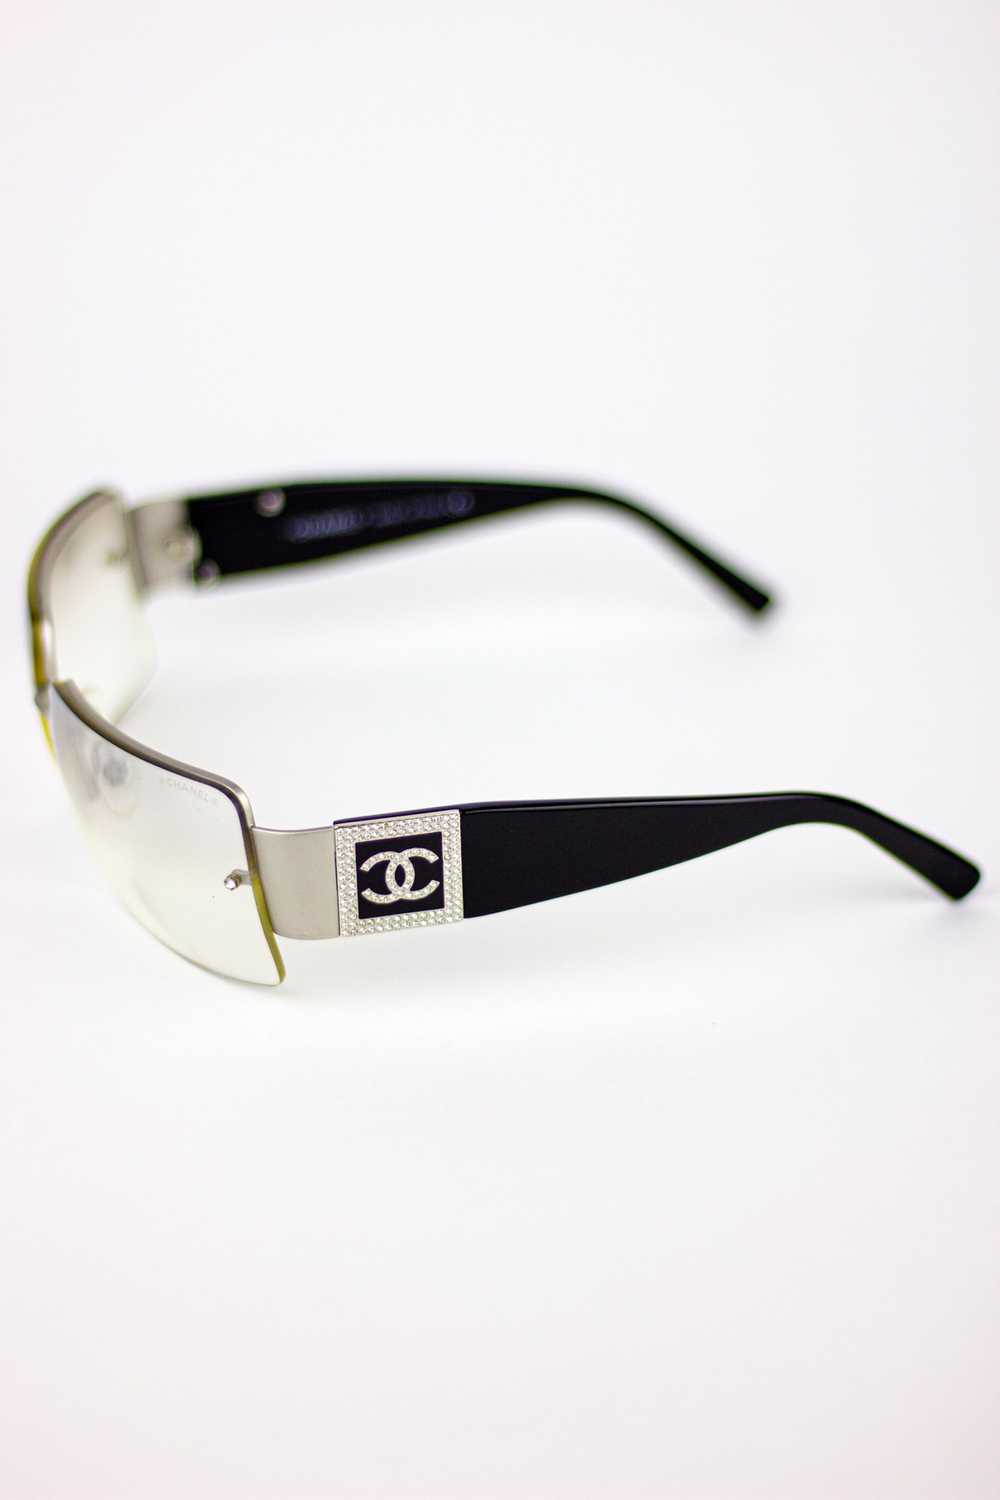 Chanel Chanel CC Logo Rhinestone Clear Sunglasses - image 5